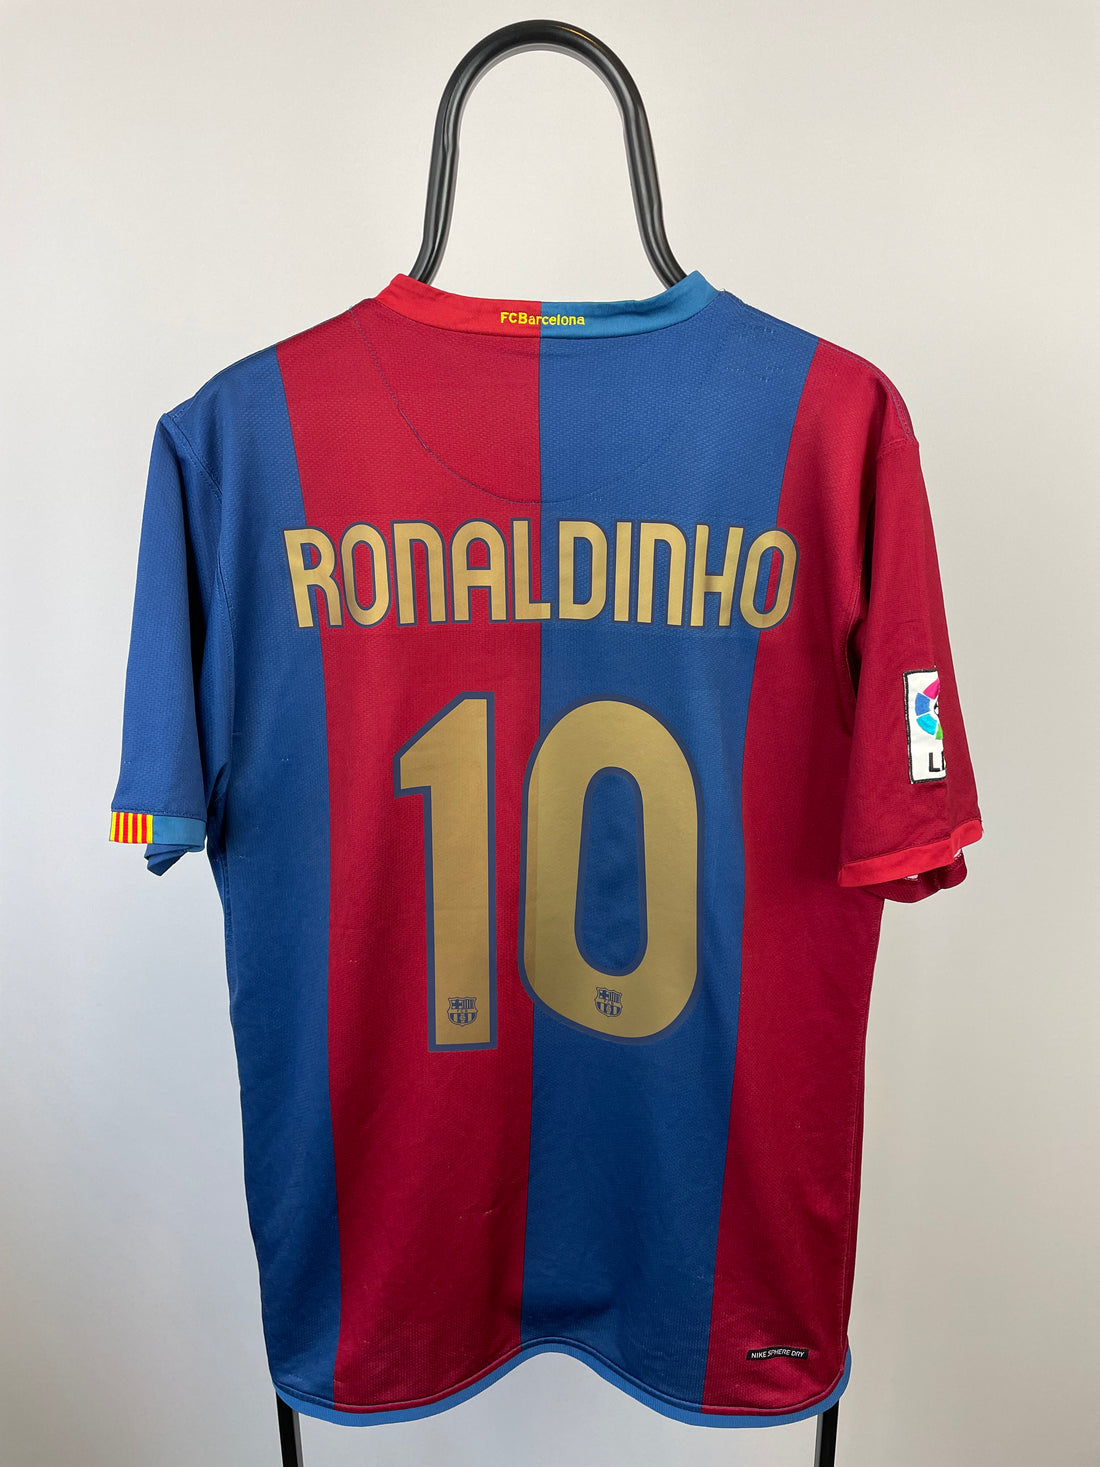 Ronaldinho FC Barcelona 06/07 hjemmebanetrøje - M